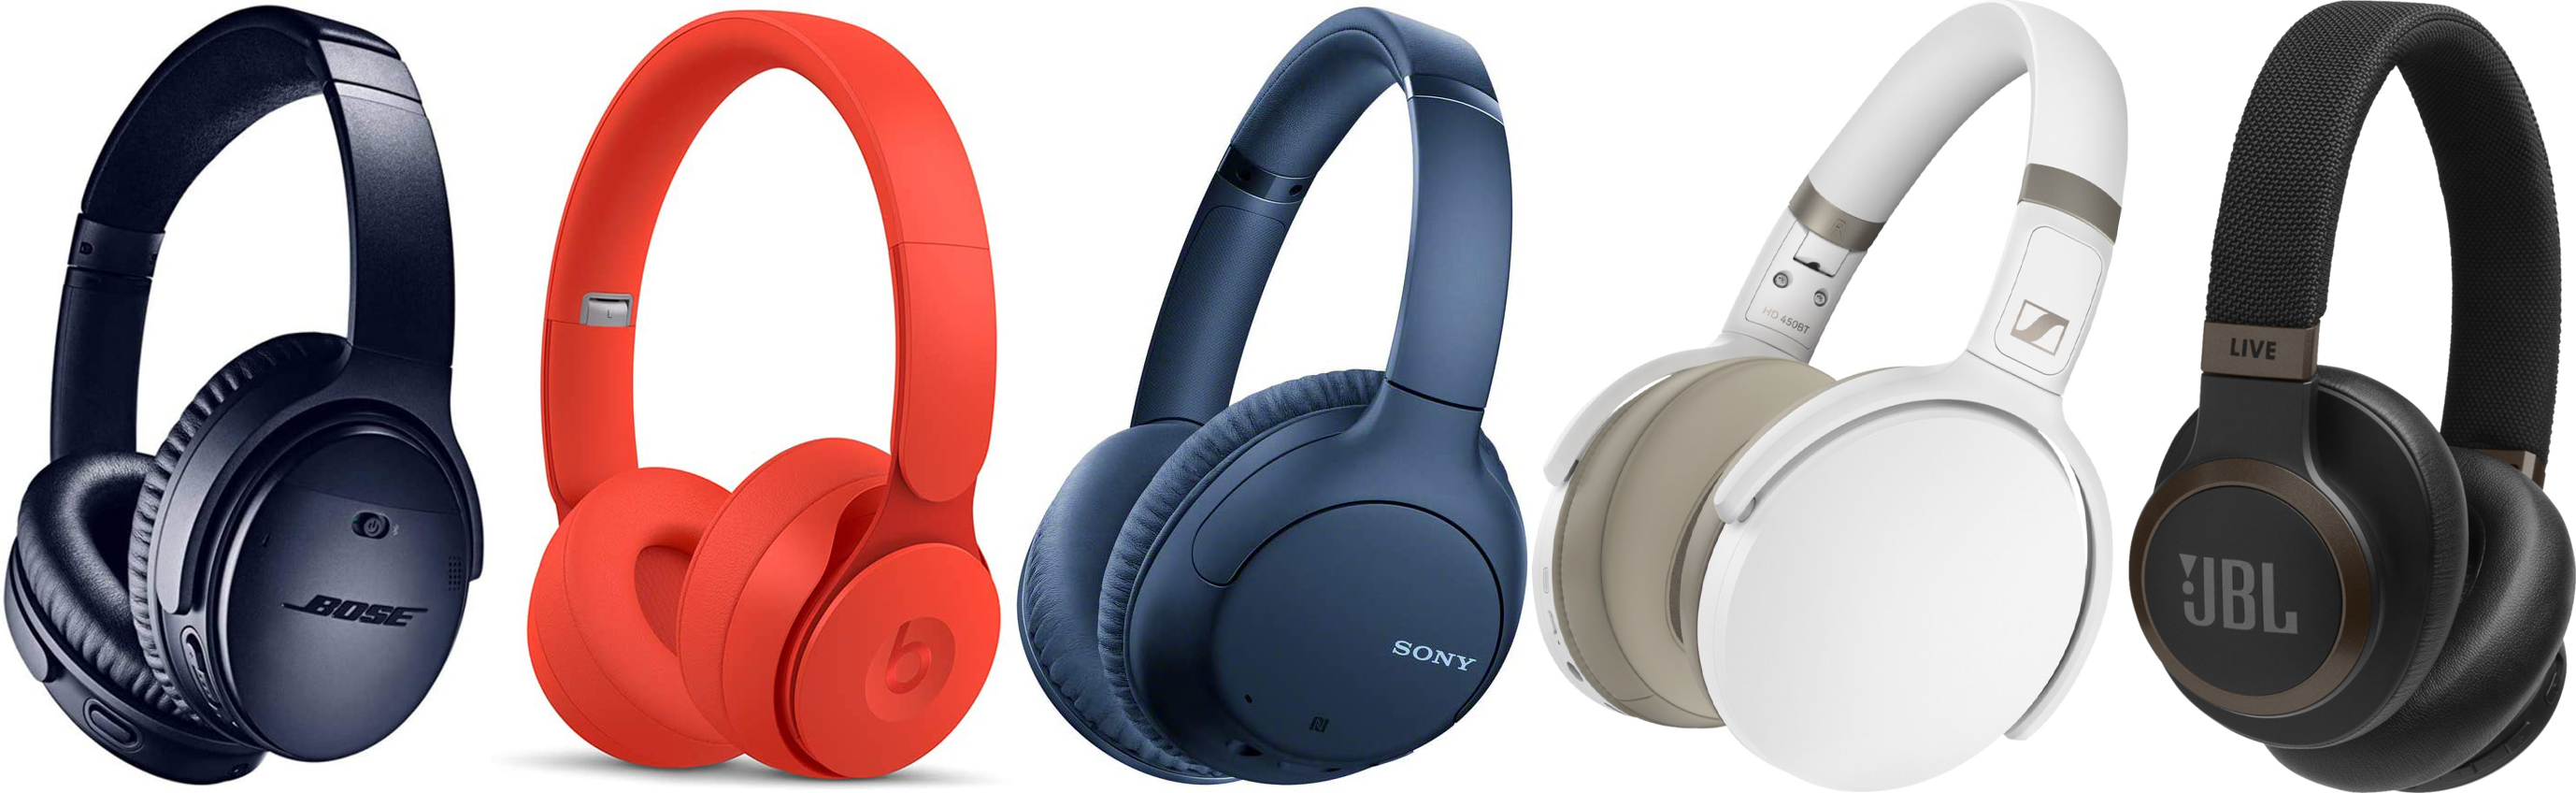 Top 5 wireless noise cancelling headphones under $200 2020